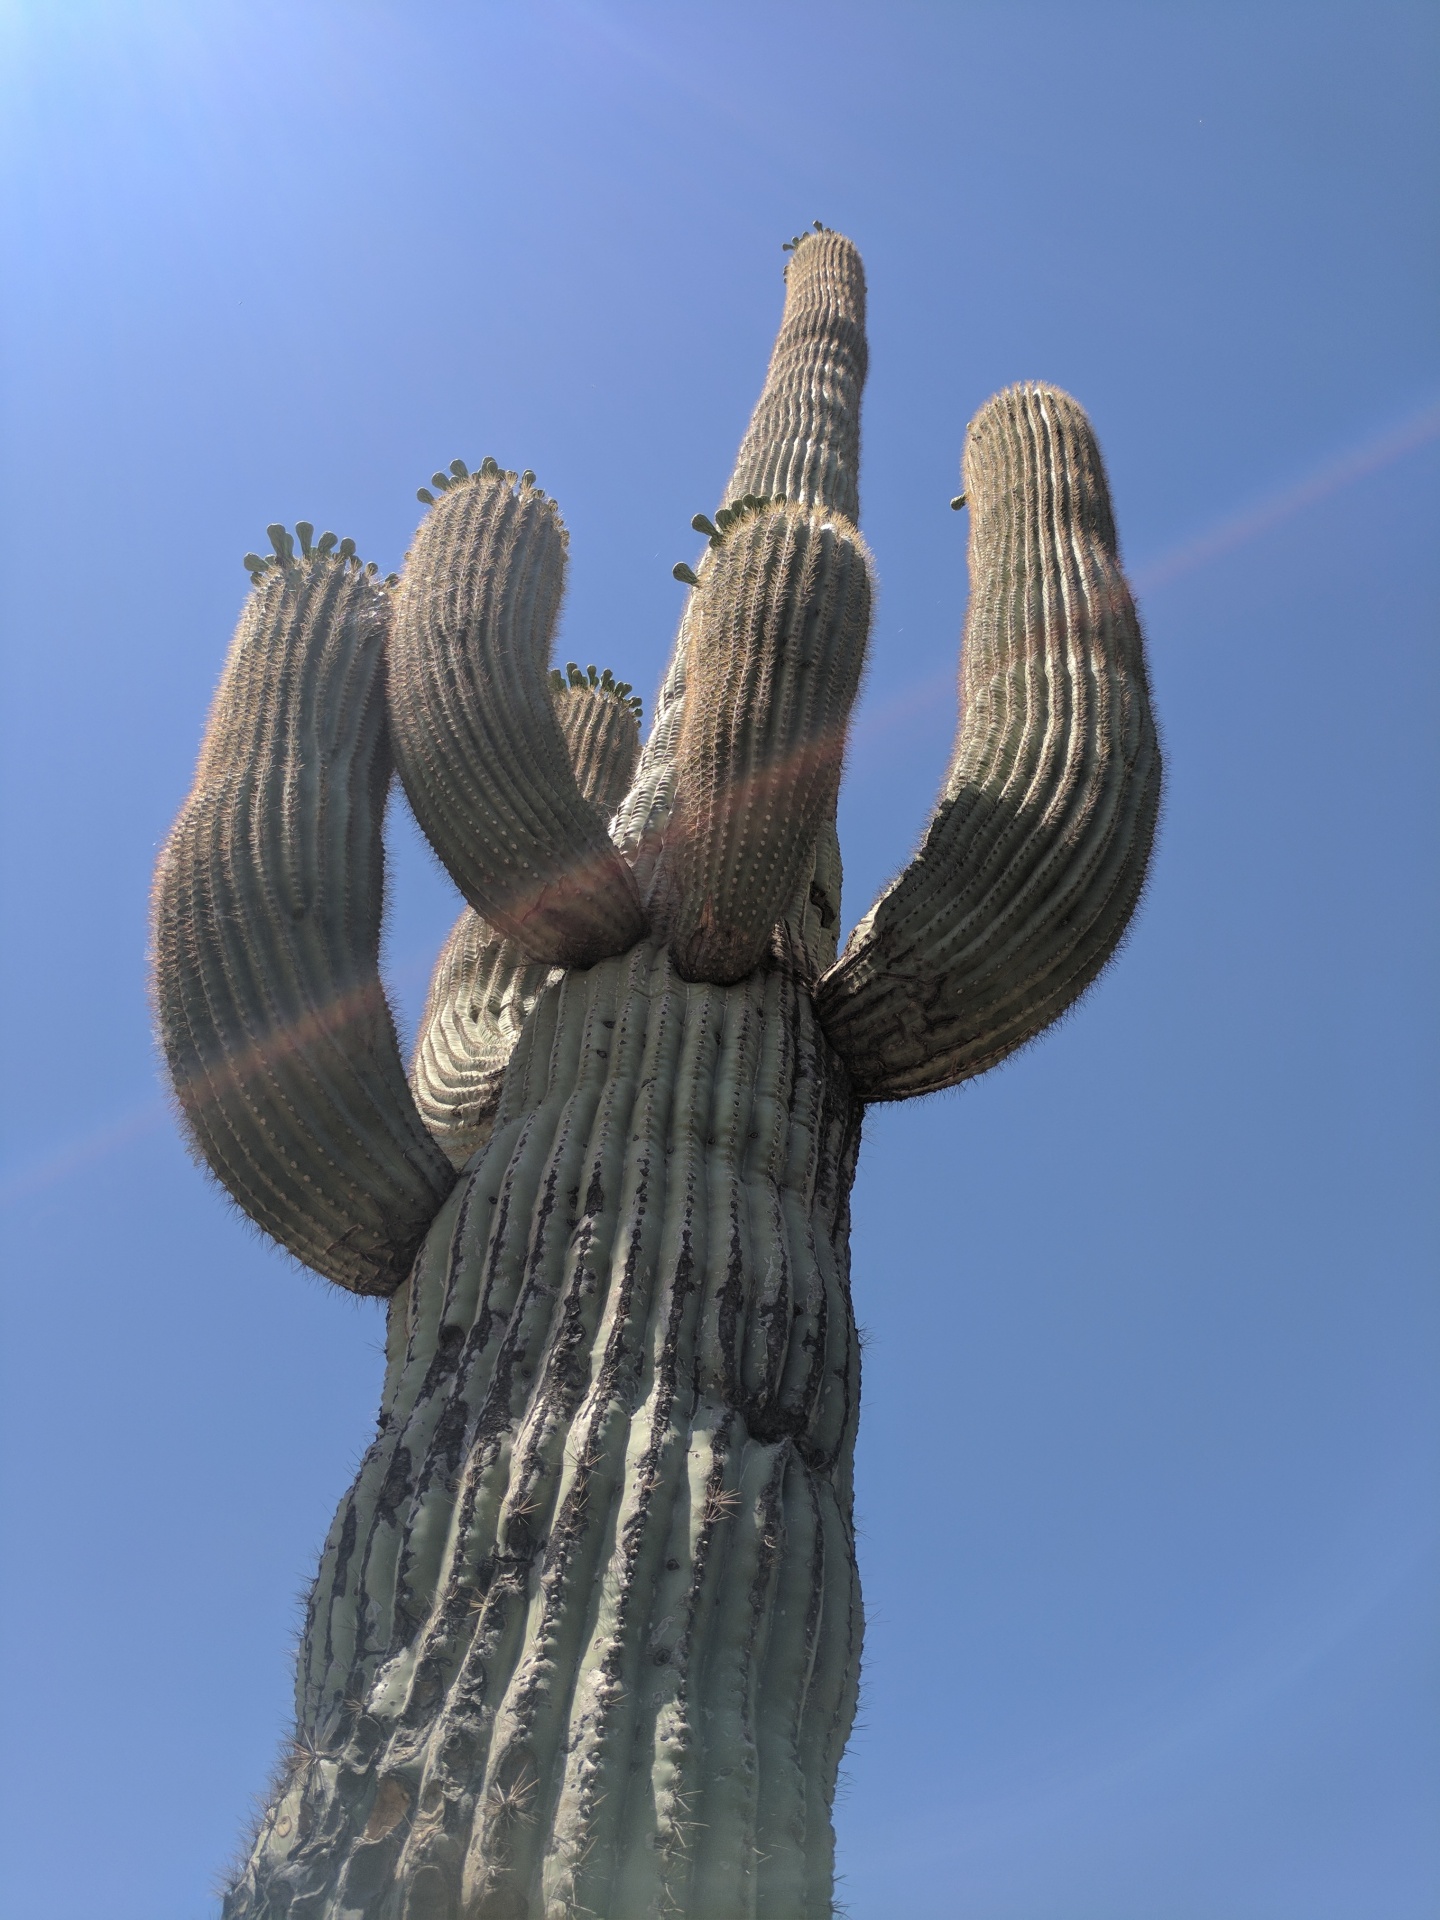 saguaro cactus desert free photo